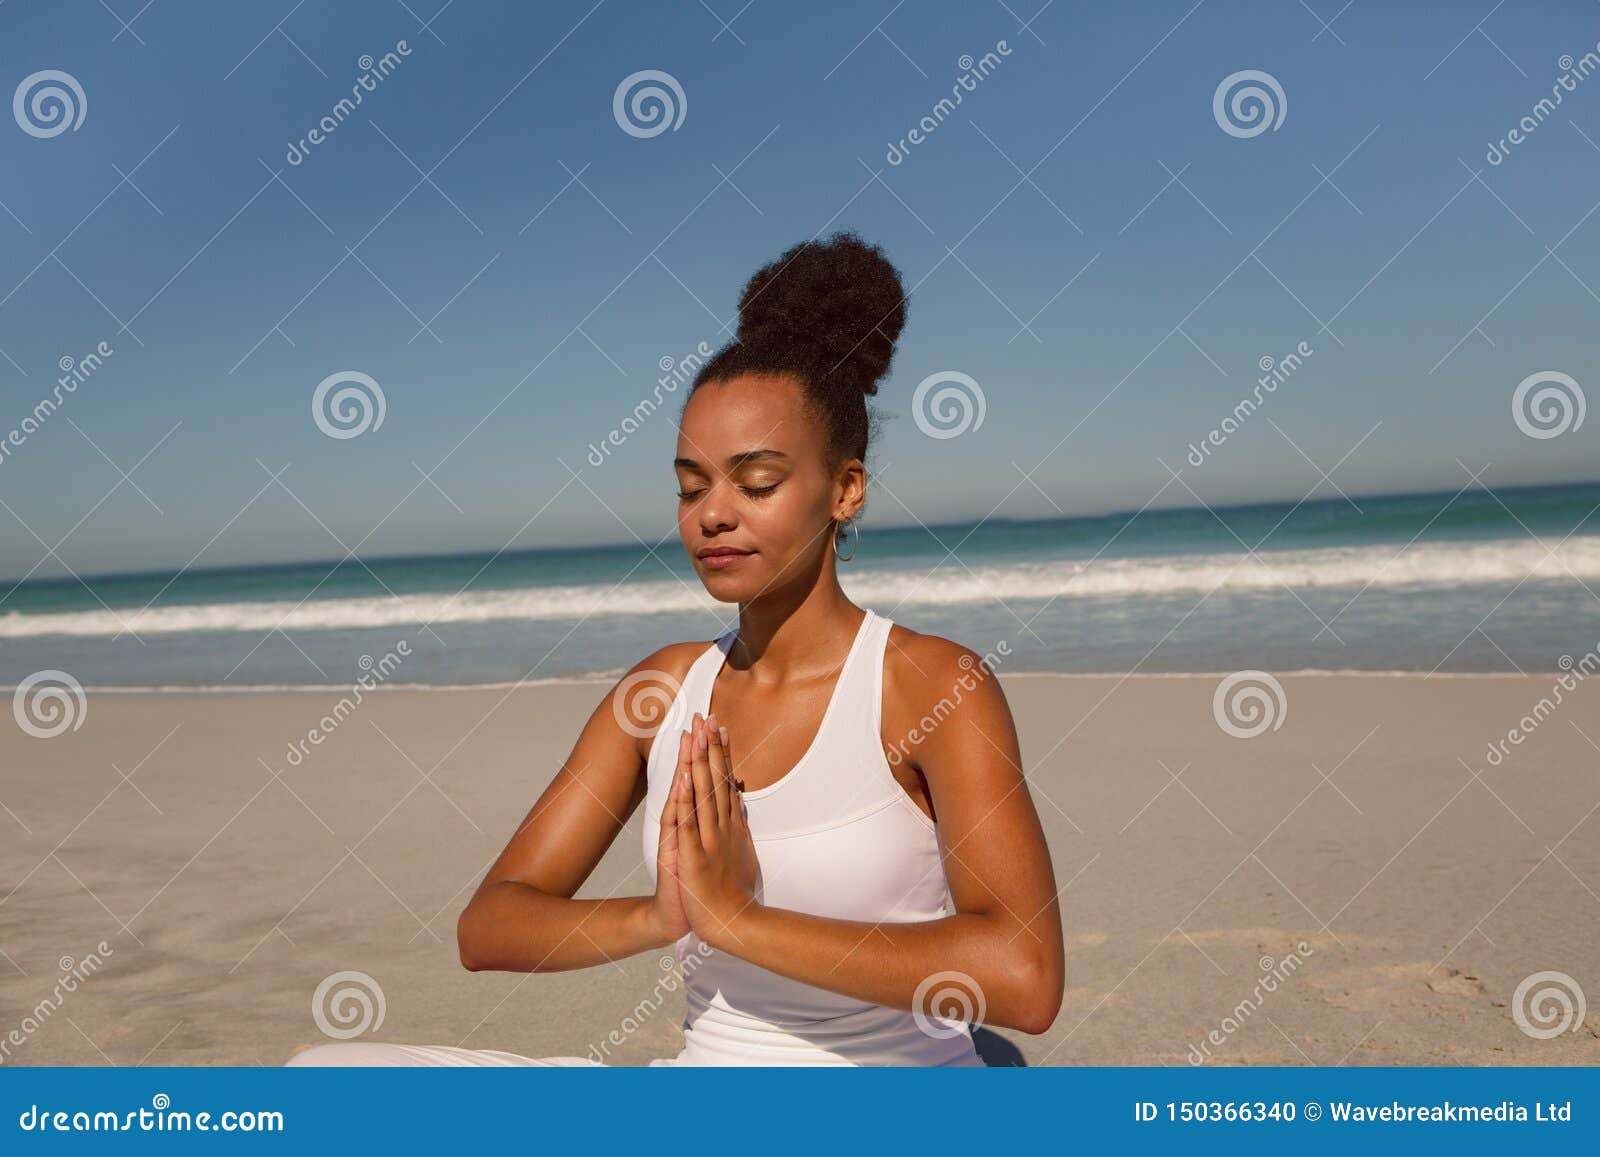 3,149 Beach Sunshine Yoga Stock Photos - Free & Royalty-Free